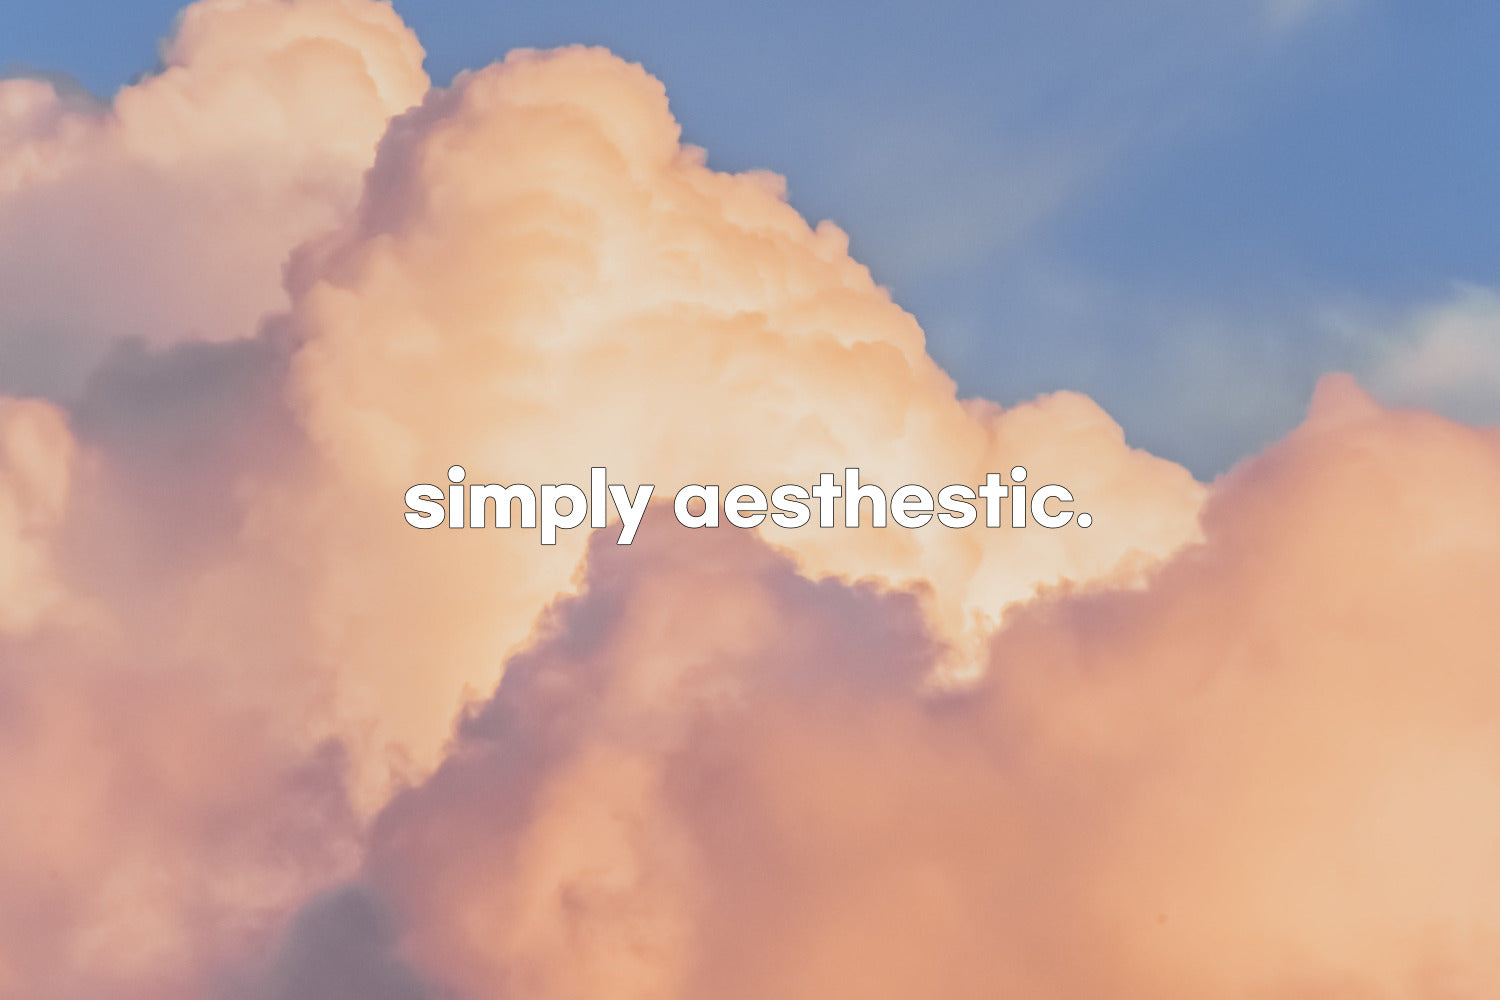 simply aesthetic on cloud dalgaru main banner